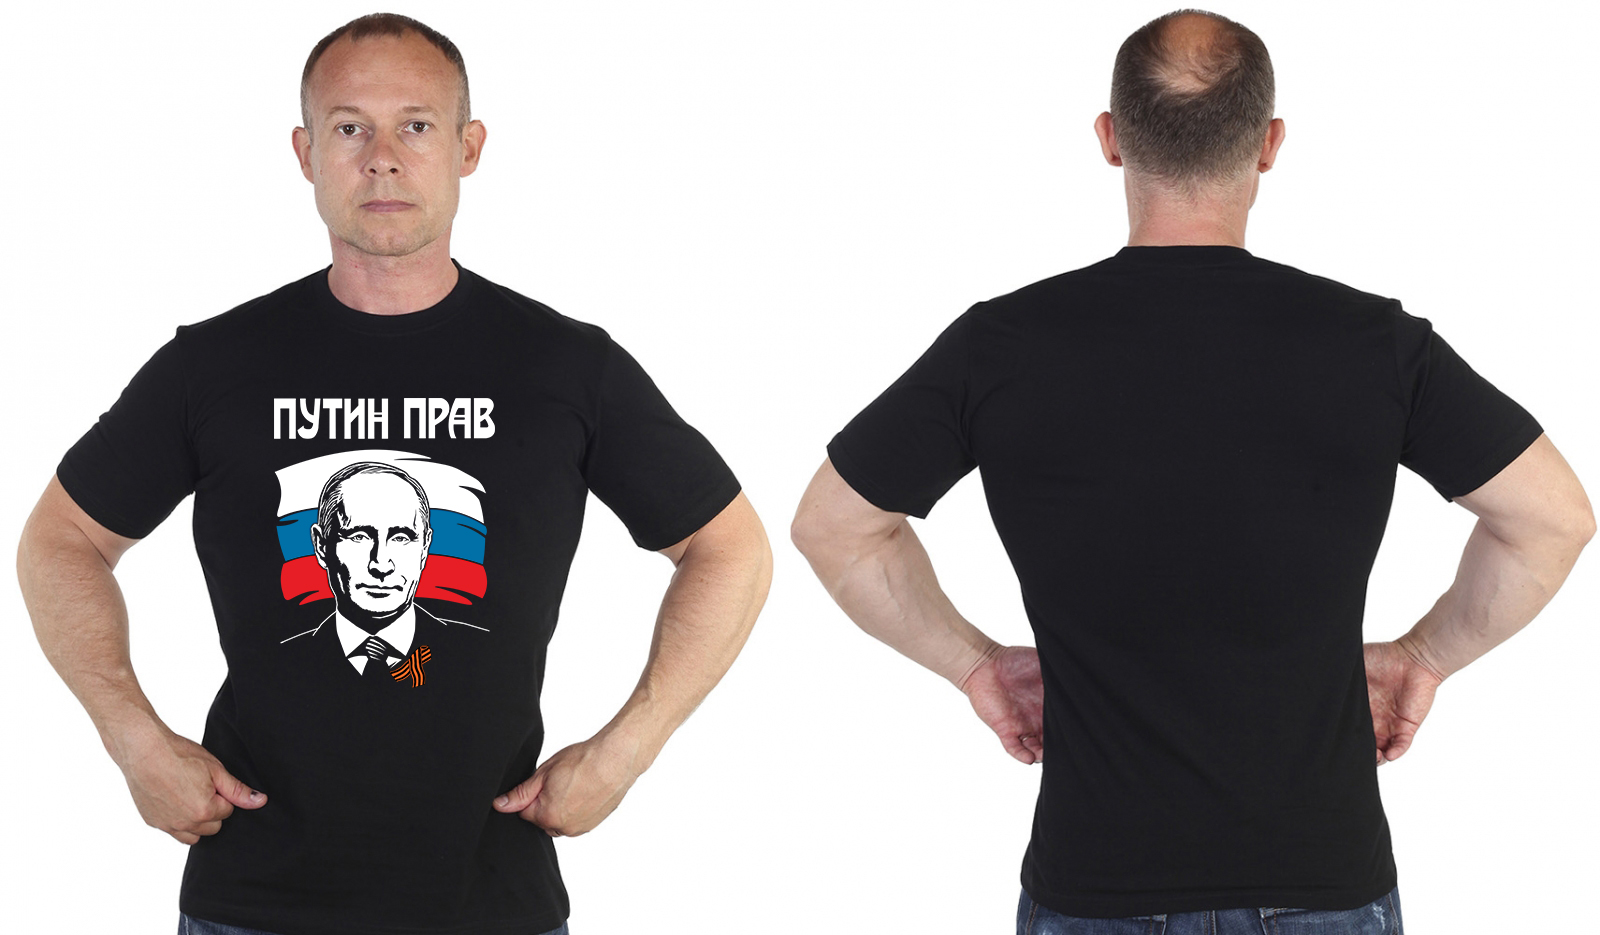 Патриотическая футболка "Путин прав"